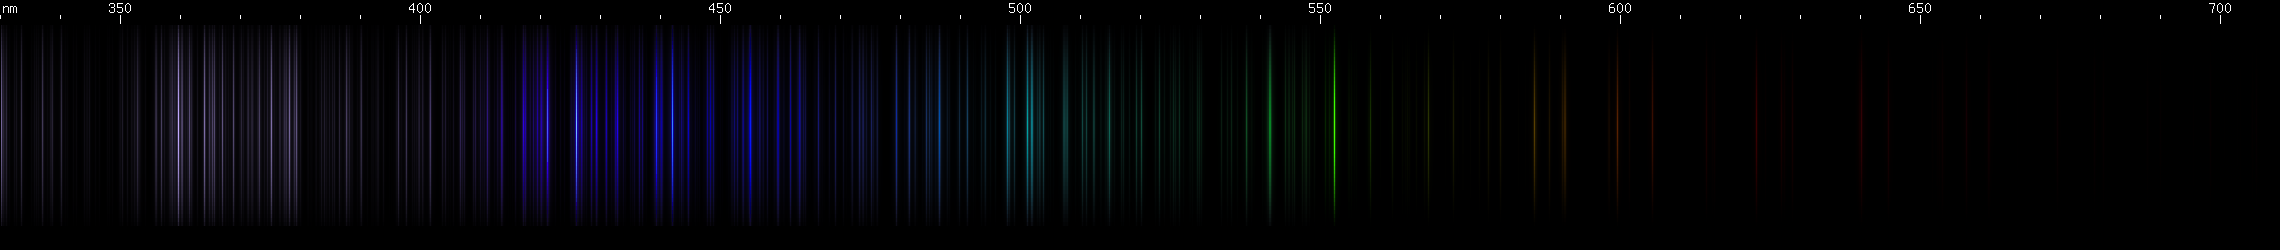 Spectral lines of Osmium.